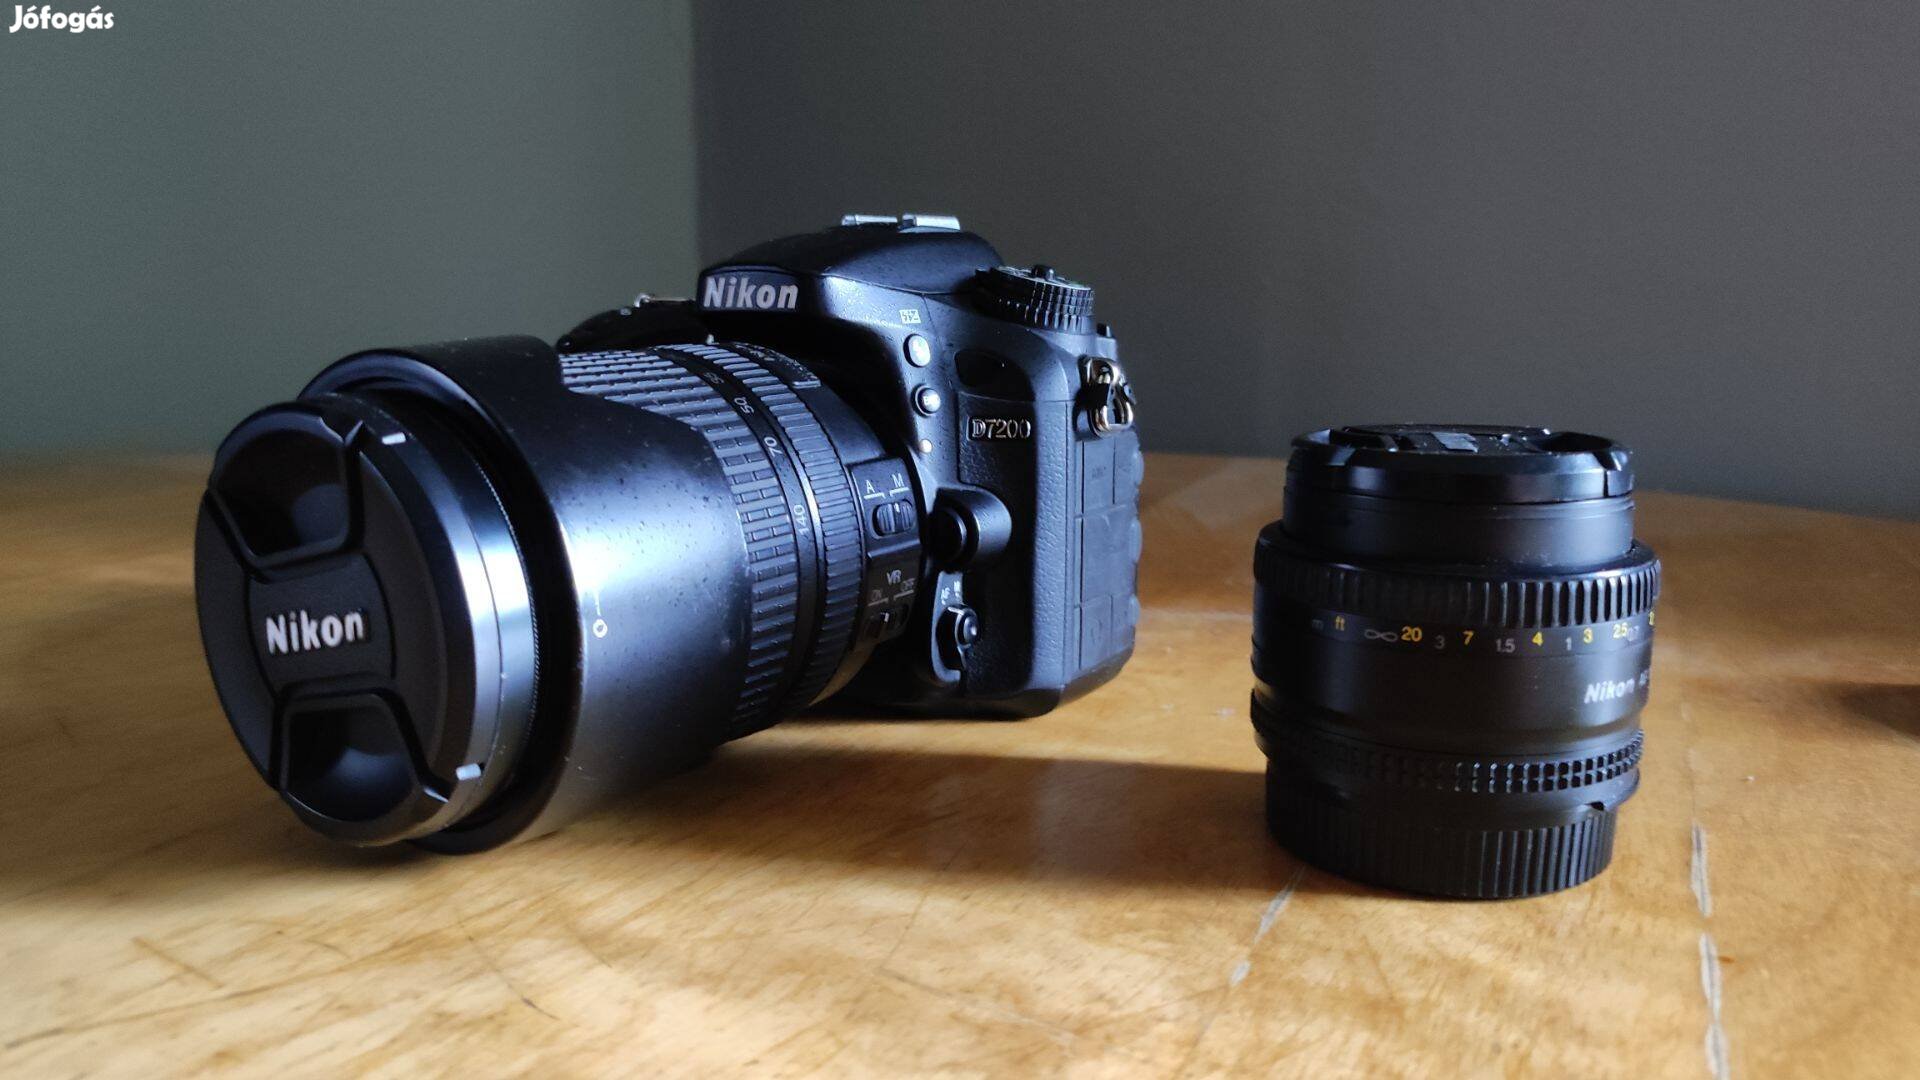 Eladó Nikon D7200, Nikkor 18-140mm, 50mm 1.8